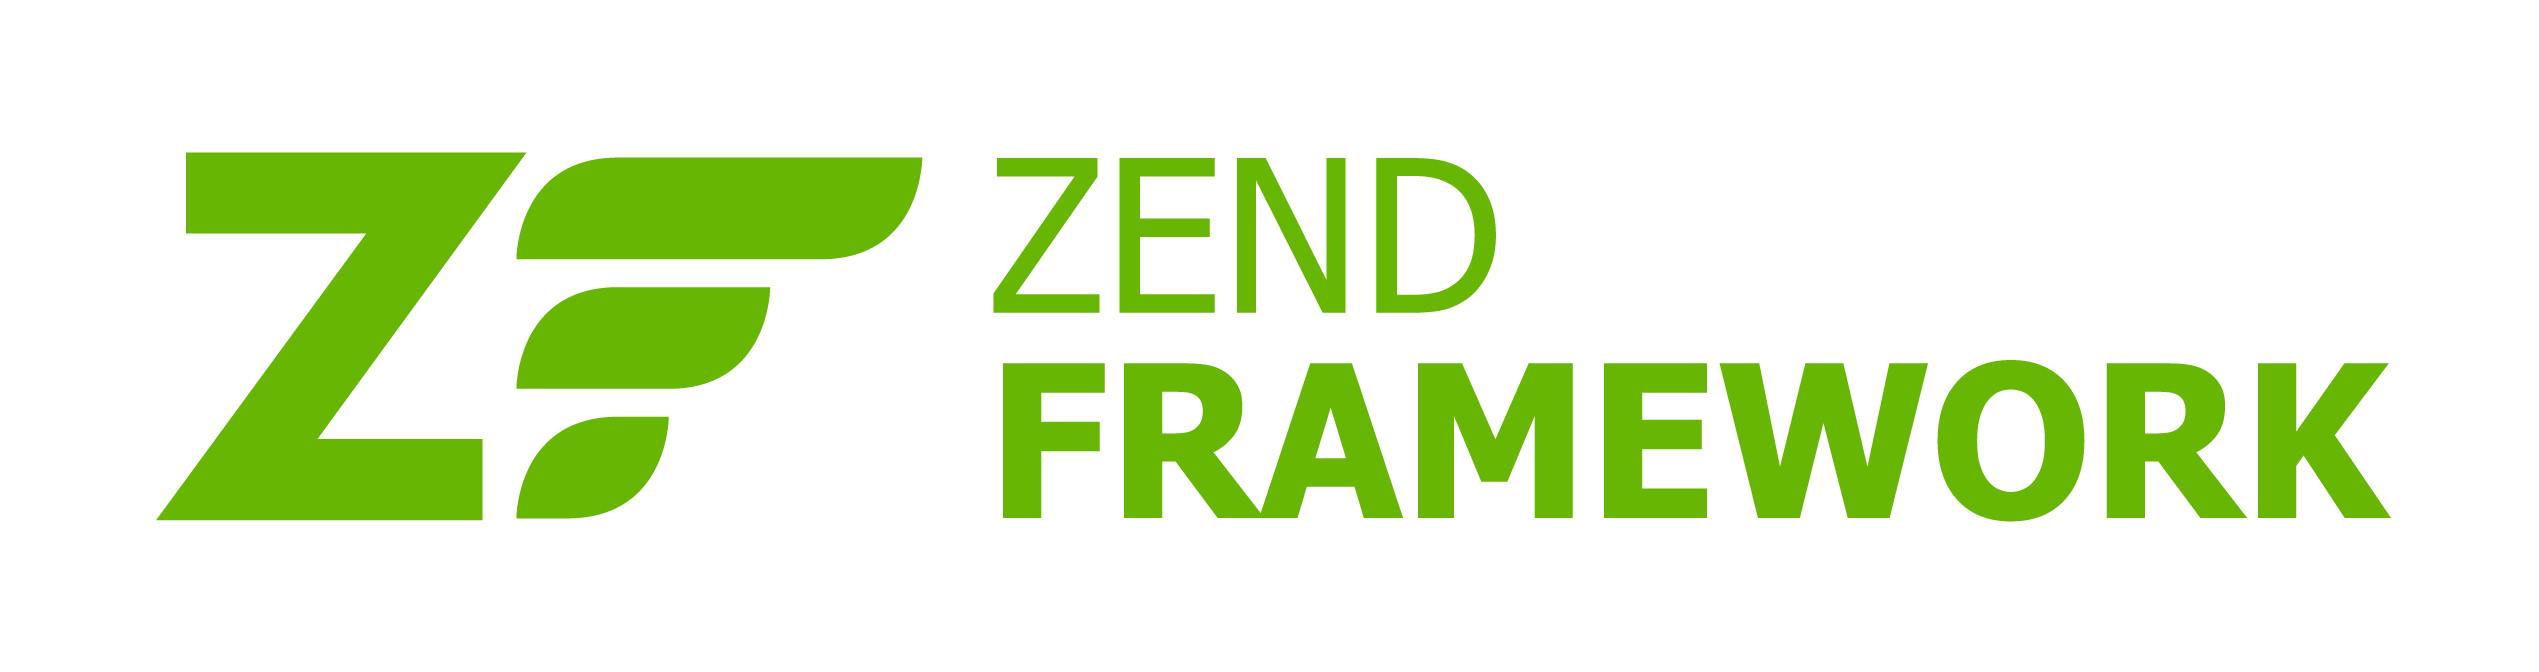 Zend-Framework Logo